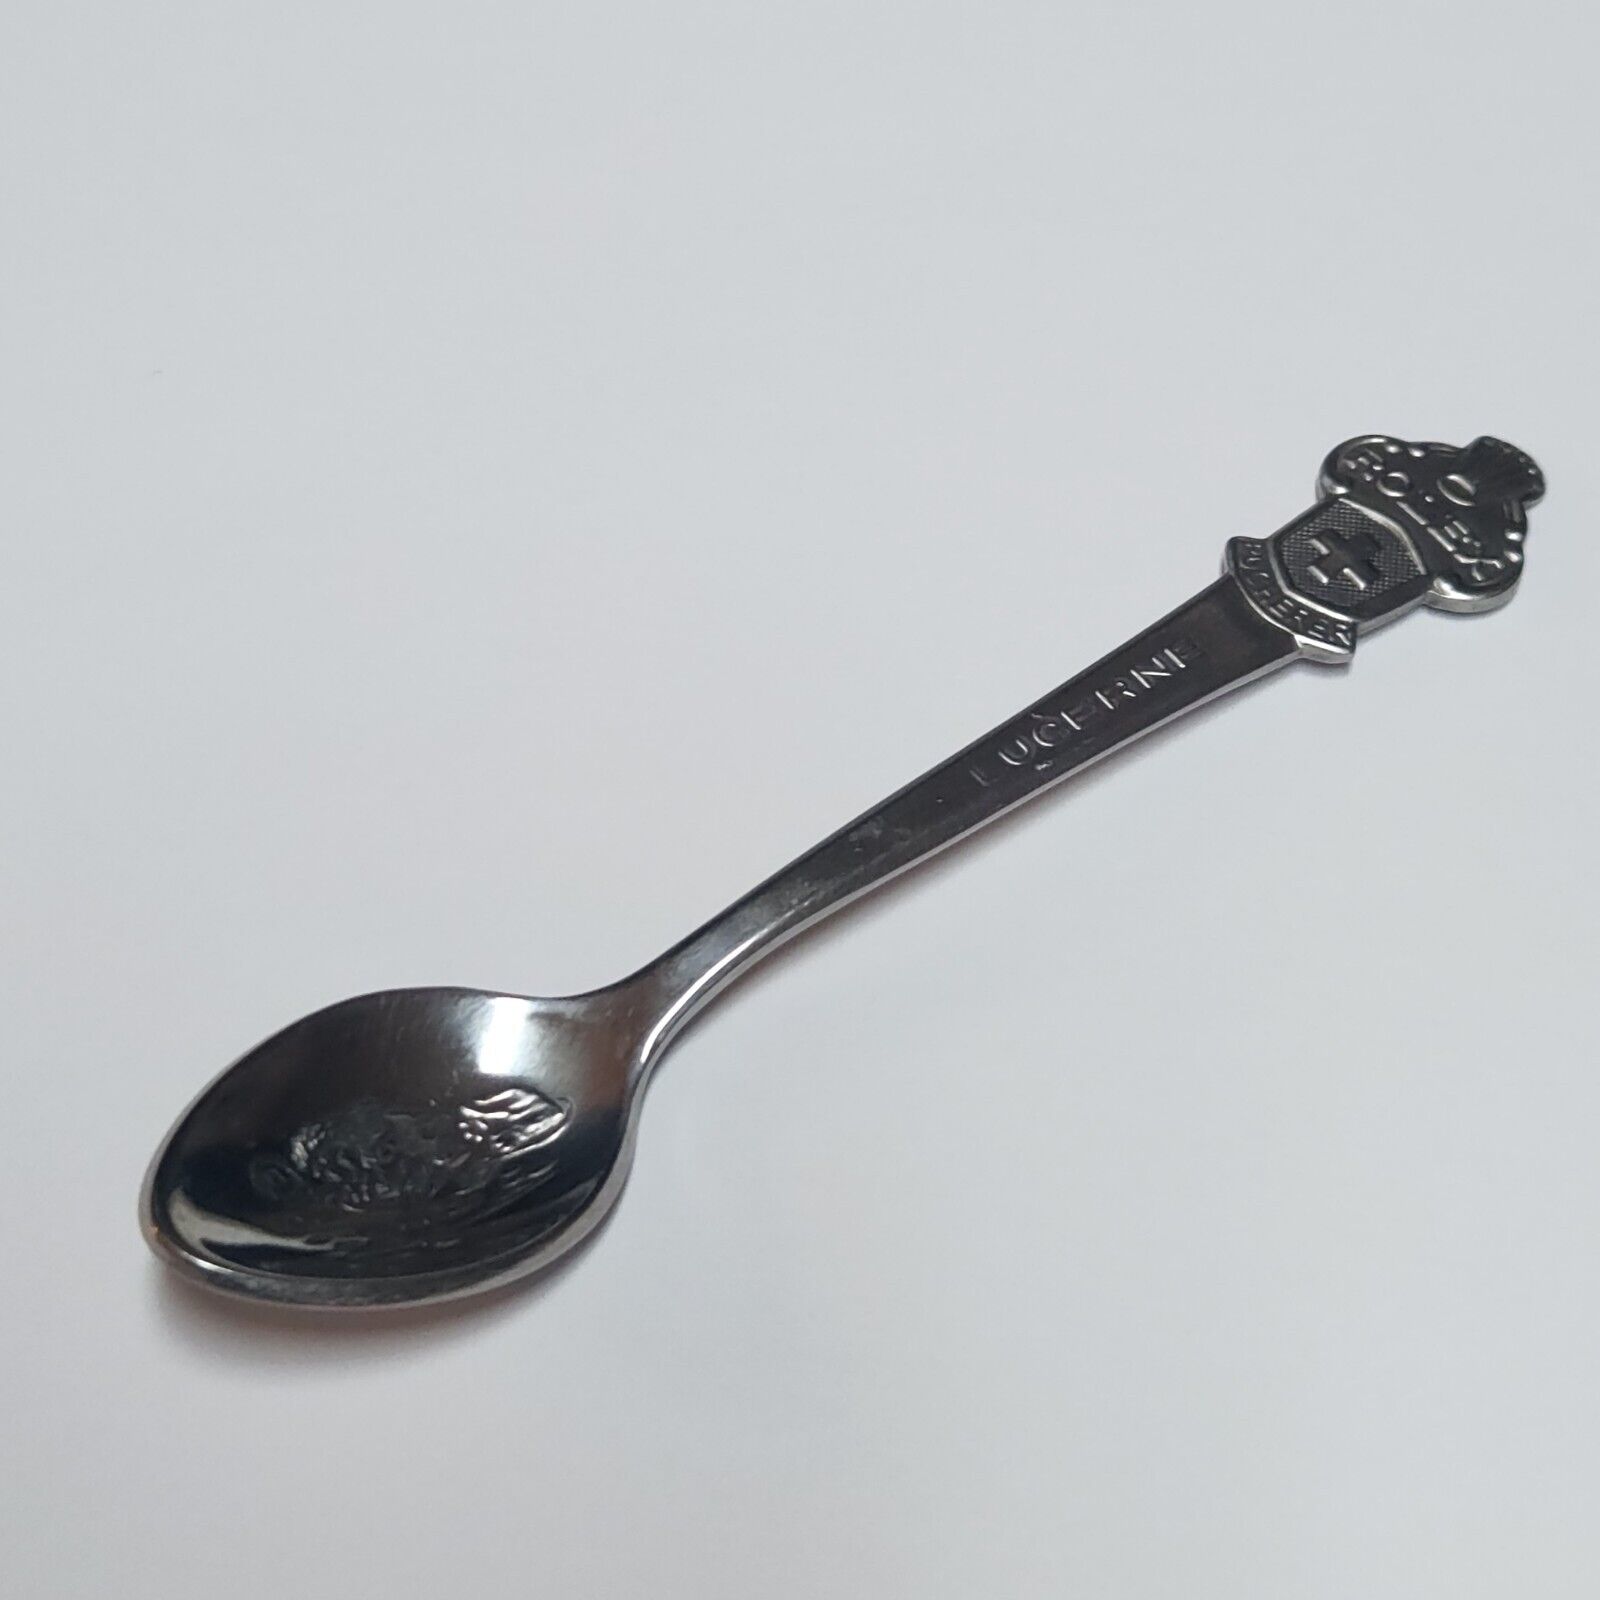 Rolex Geneve Bucherer of Switzerland Vintage Souvenir Spoon Collectible Silver 